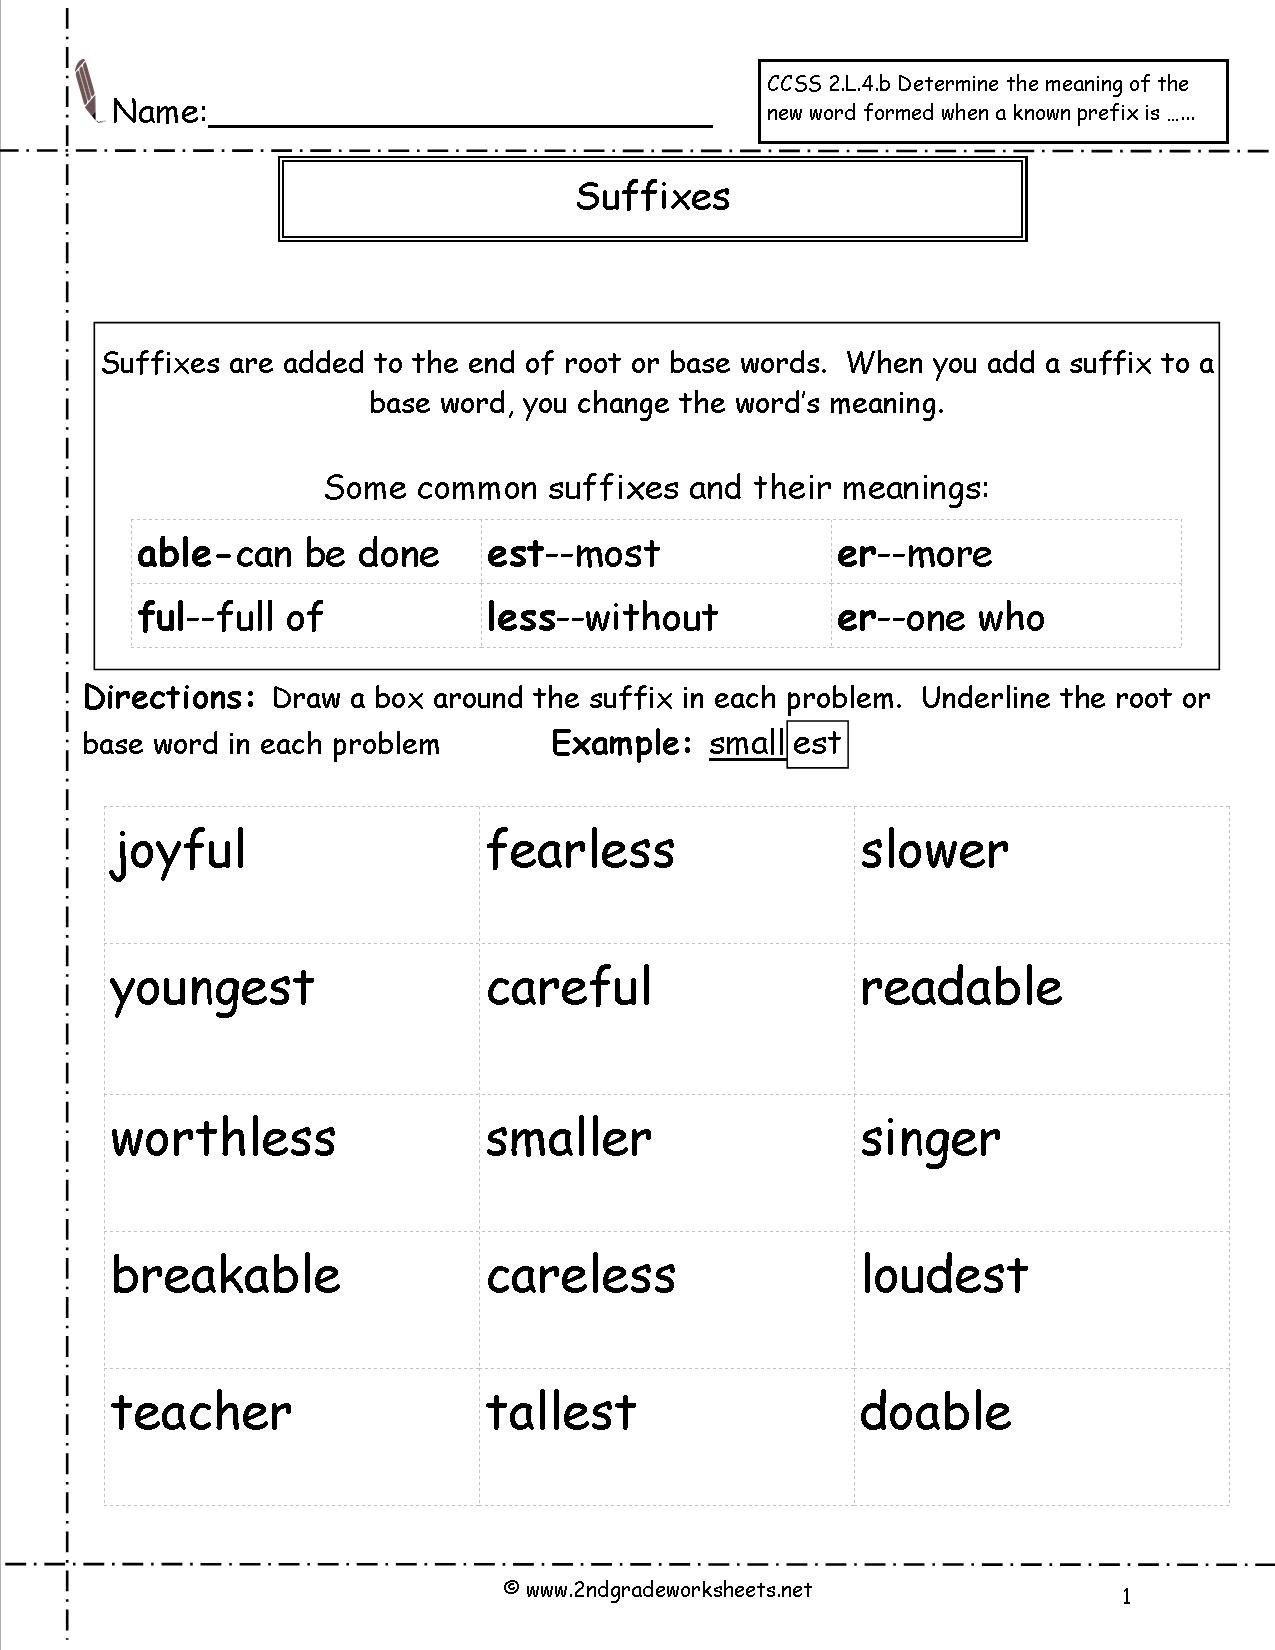 prefix-and-suffix-worksheets-4th-grade